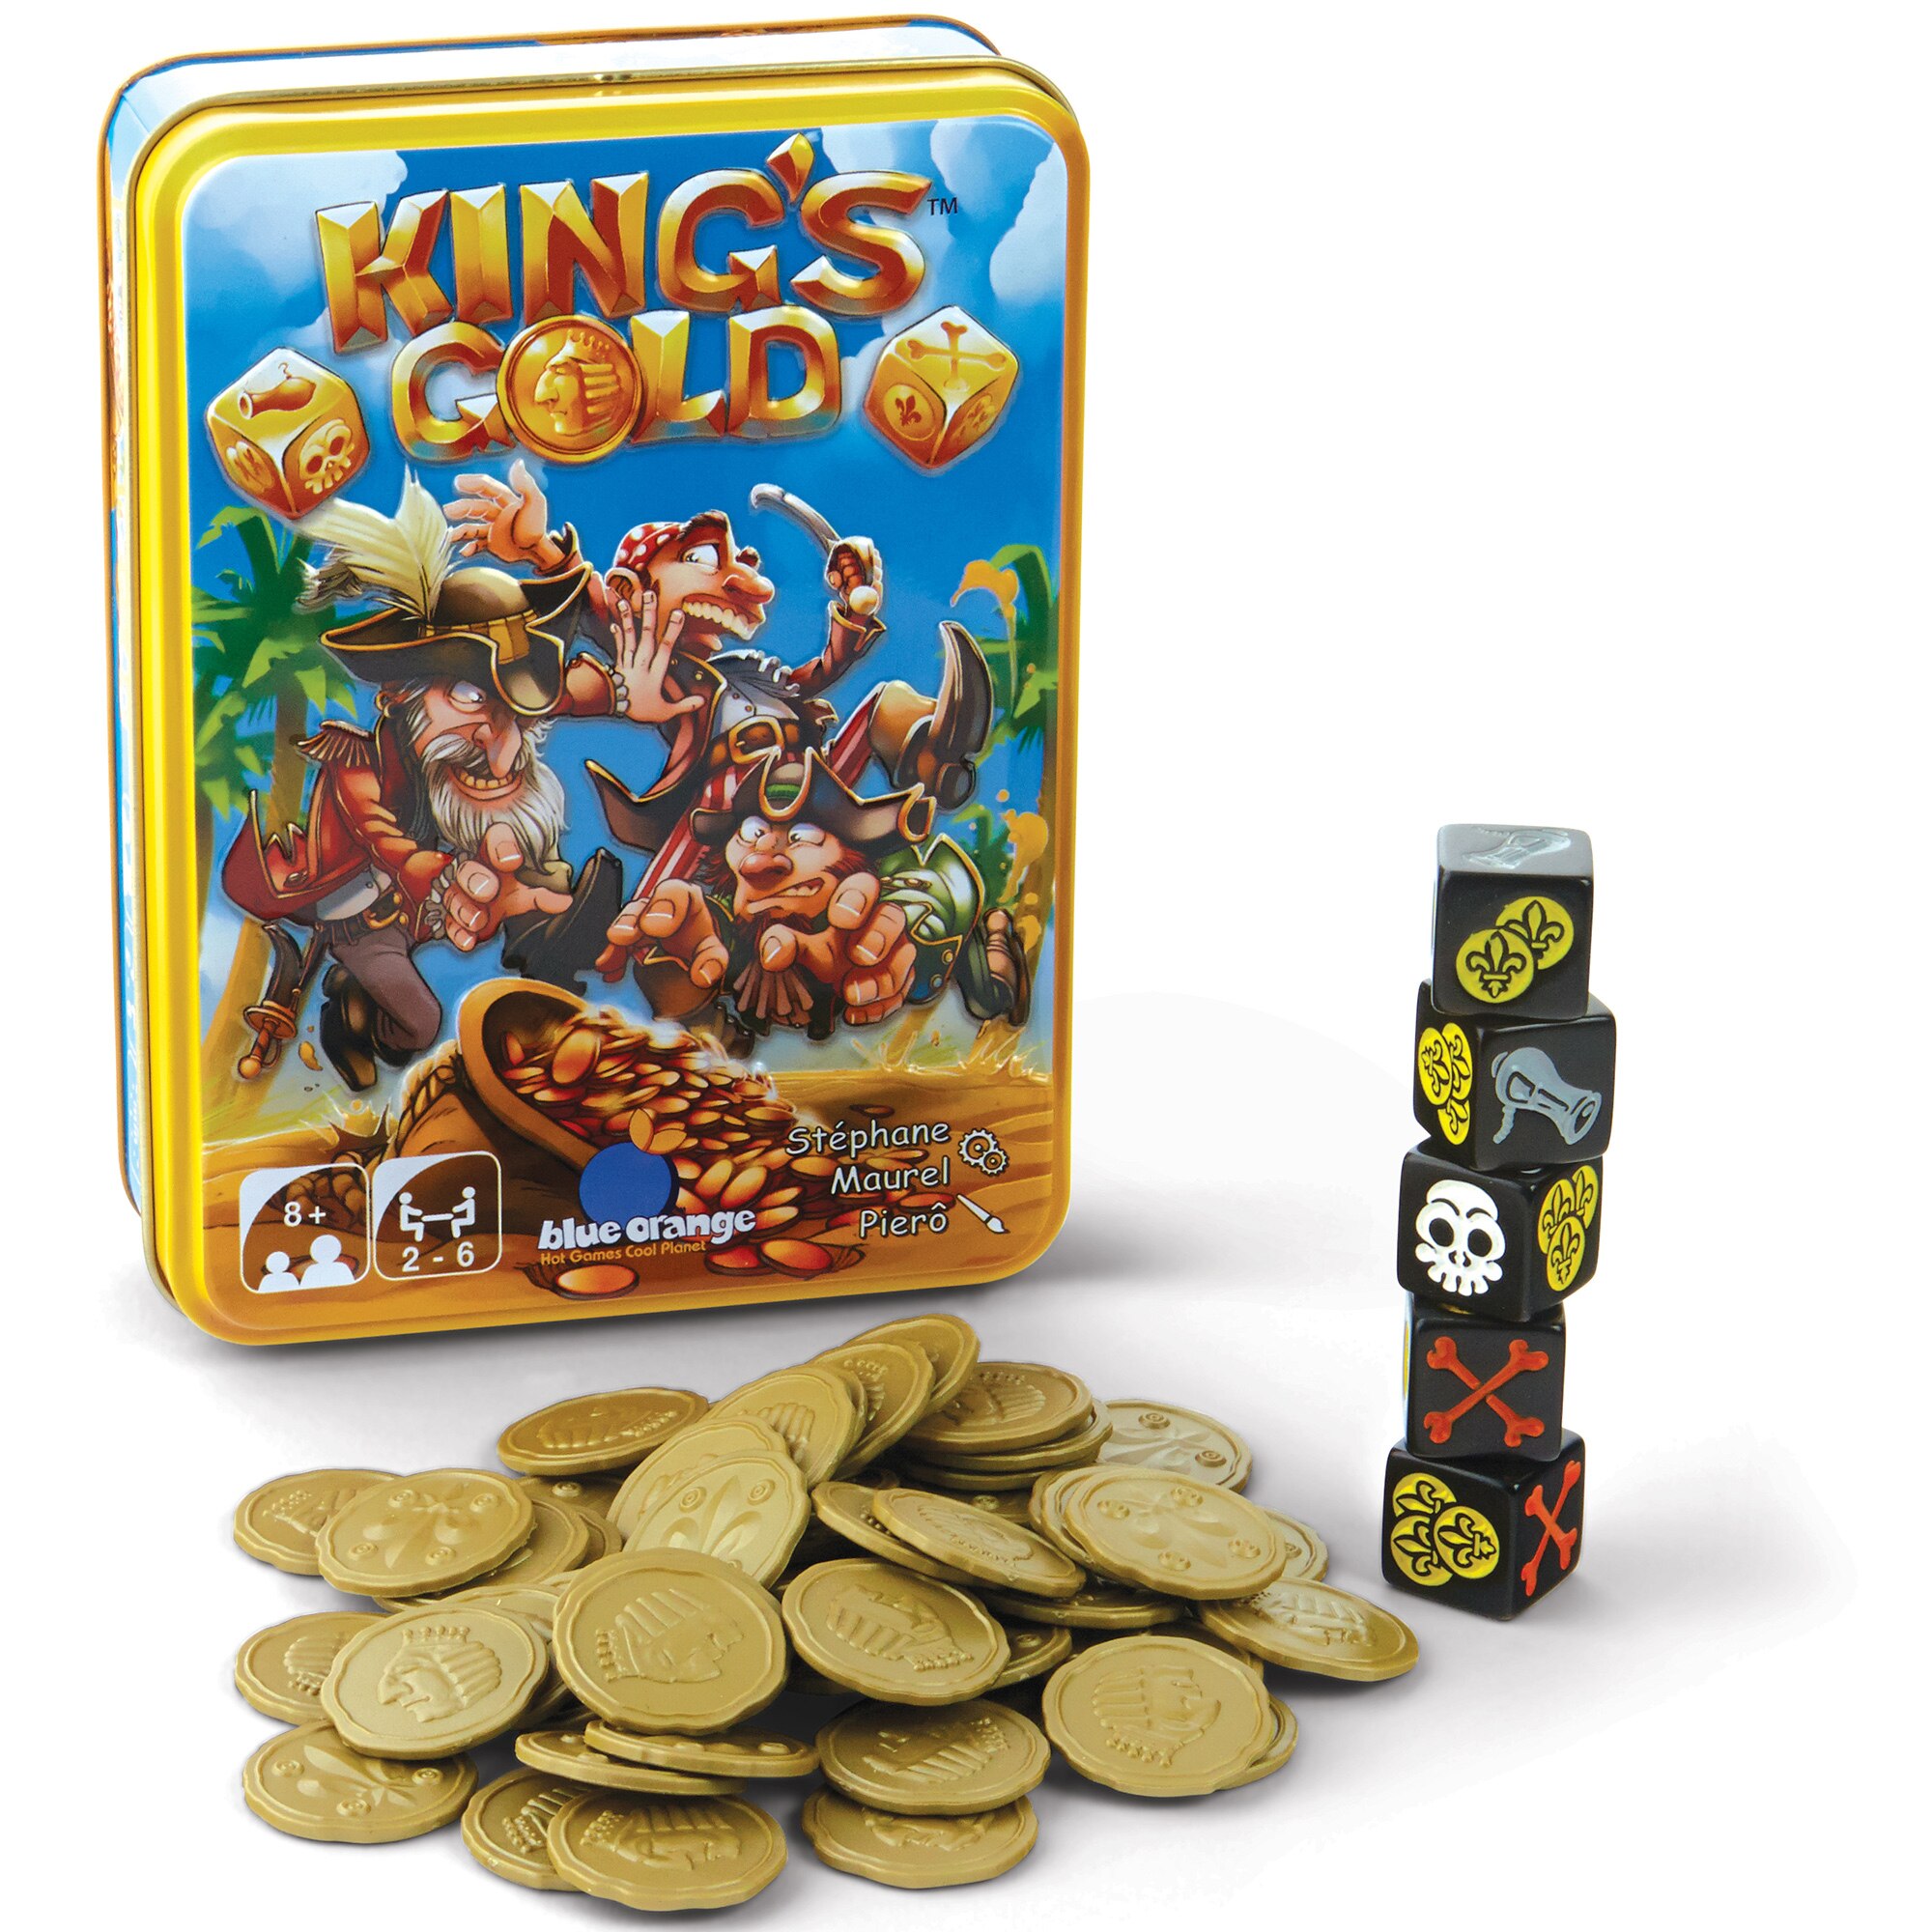 Treasure x gold. Настольная игра "золото". Золото пиратов игра. Робот Treasure Gold. Золото короля настолка.